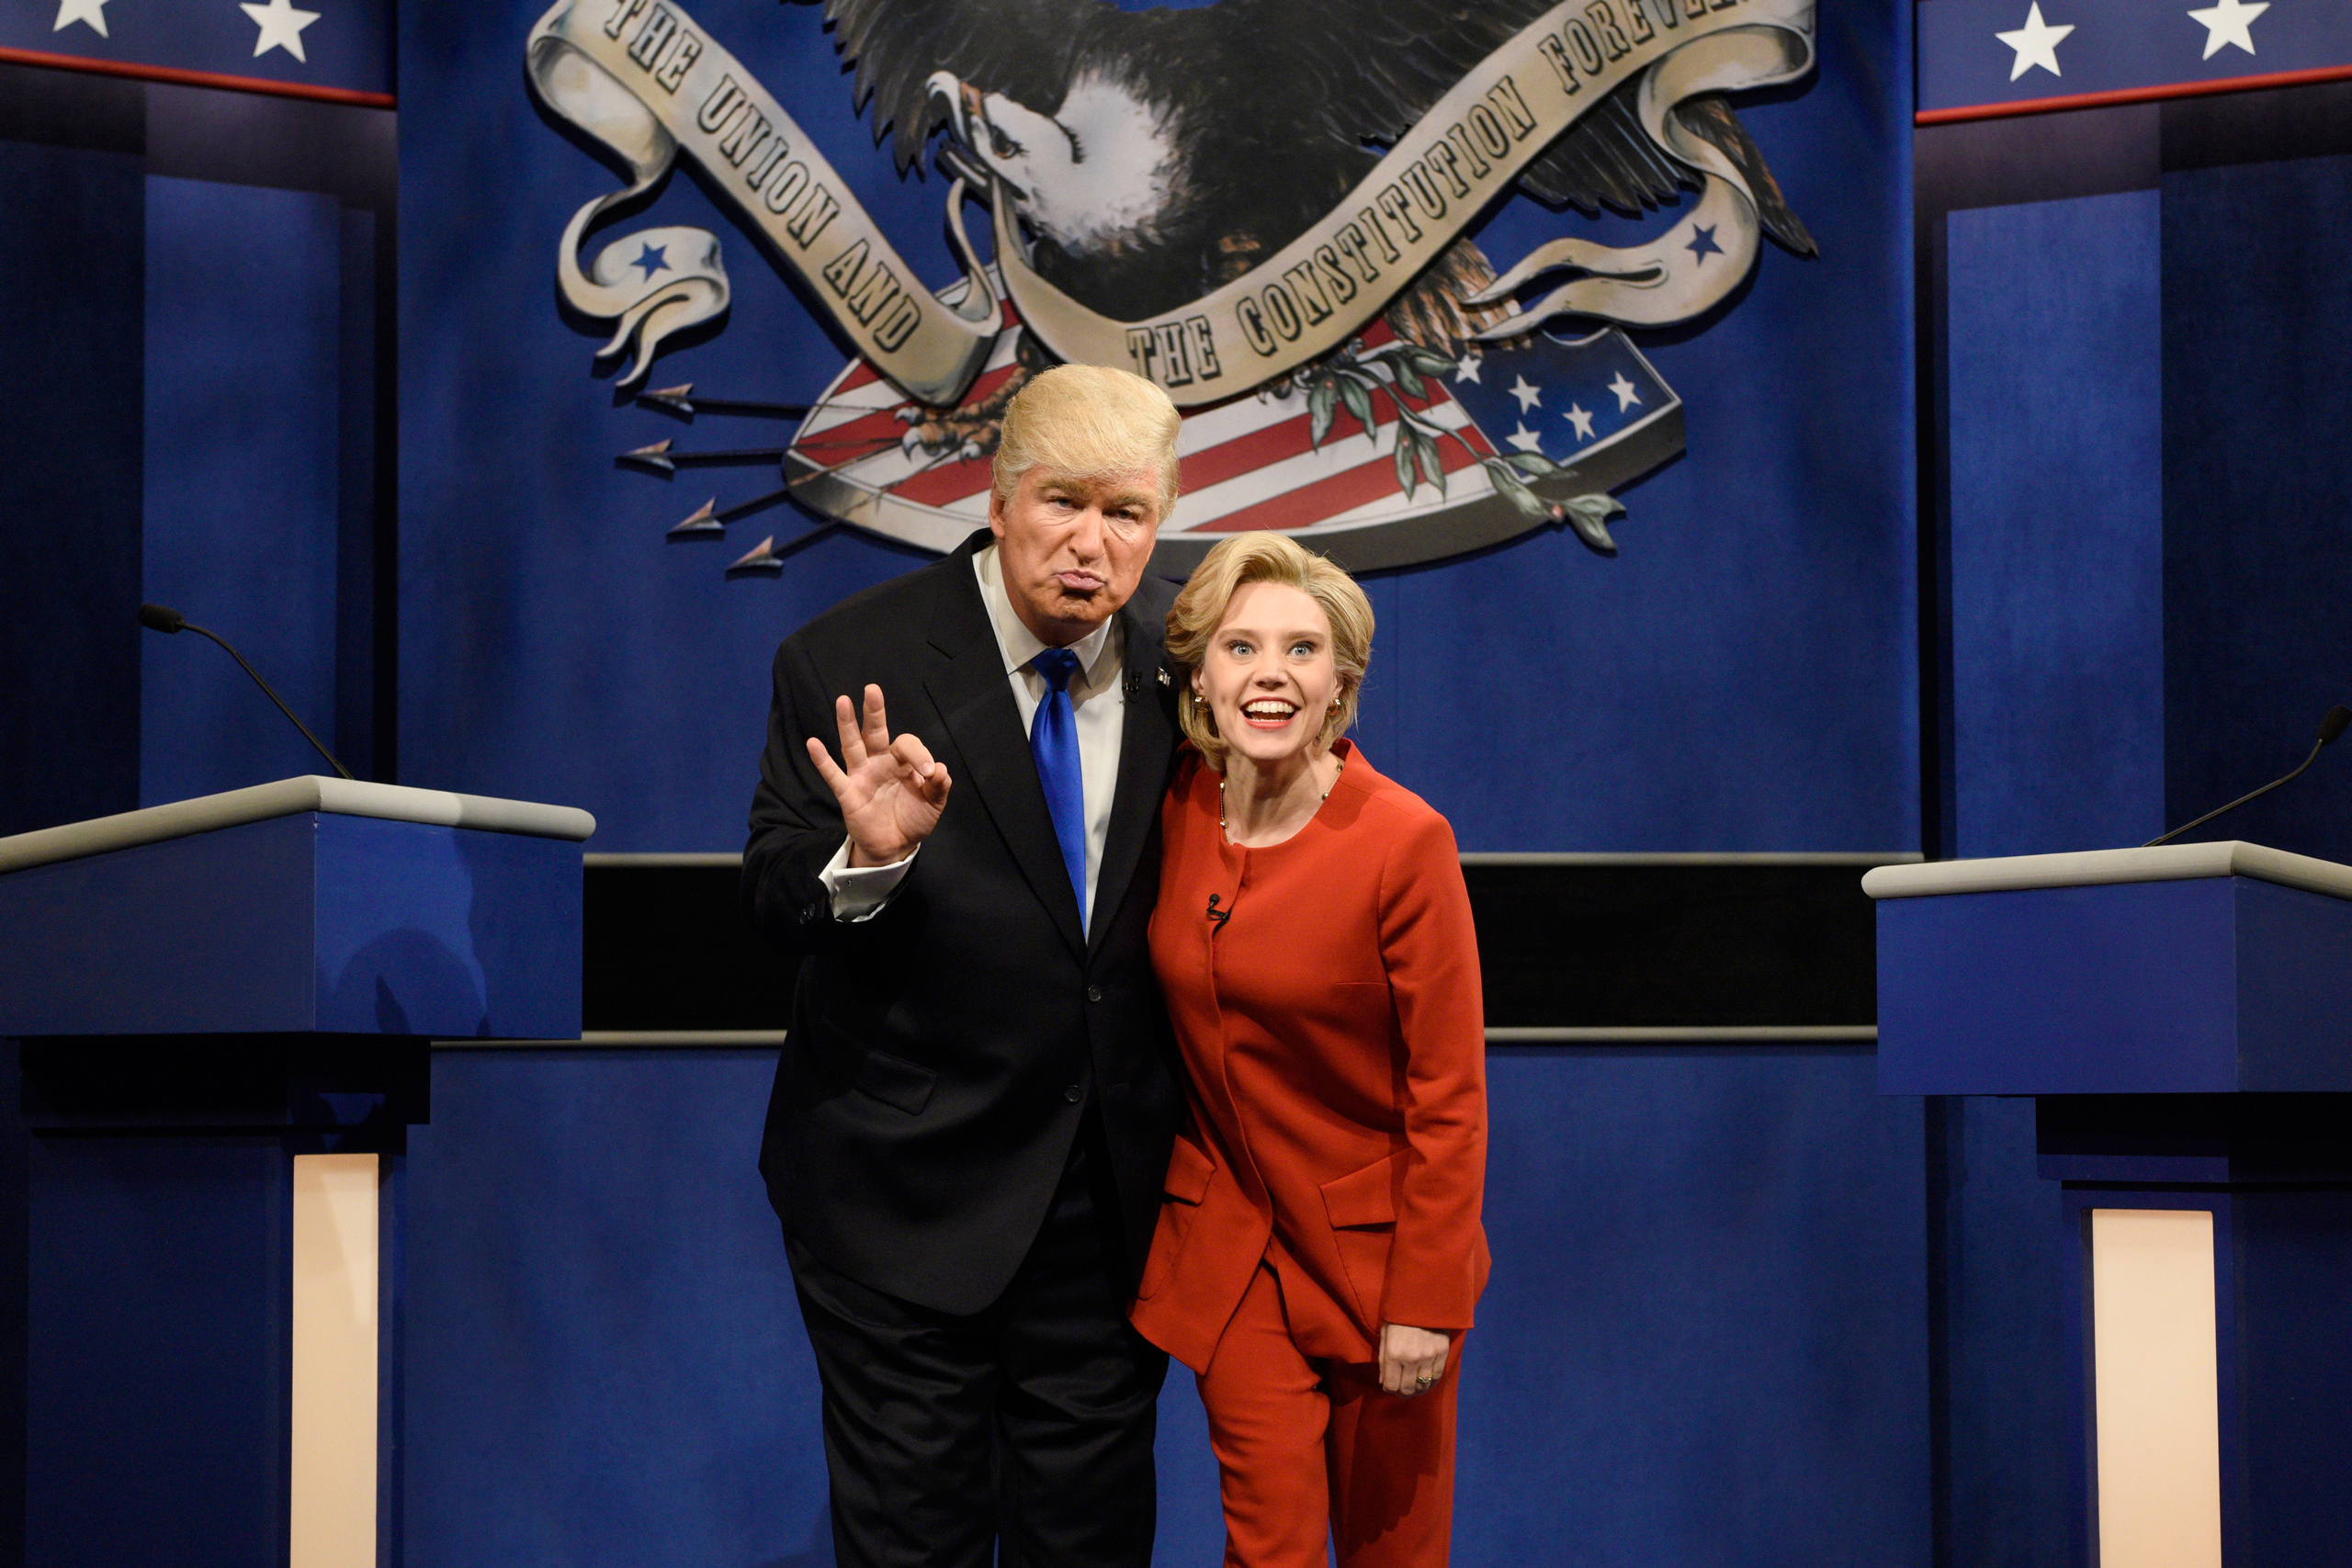 Alec Baldwin as Donald Trump and Kate McKinnon as Hillary Clinton during the 